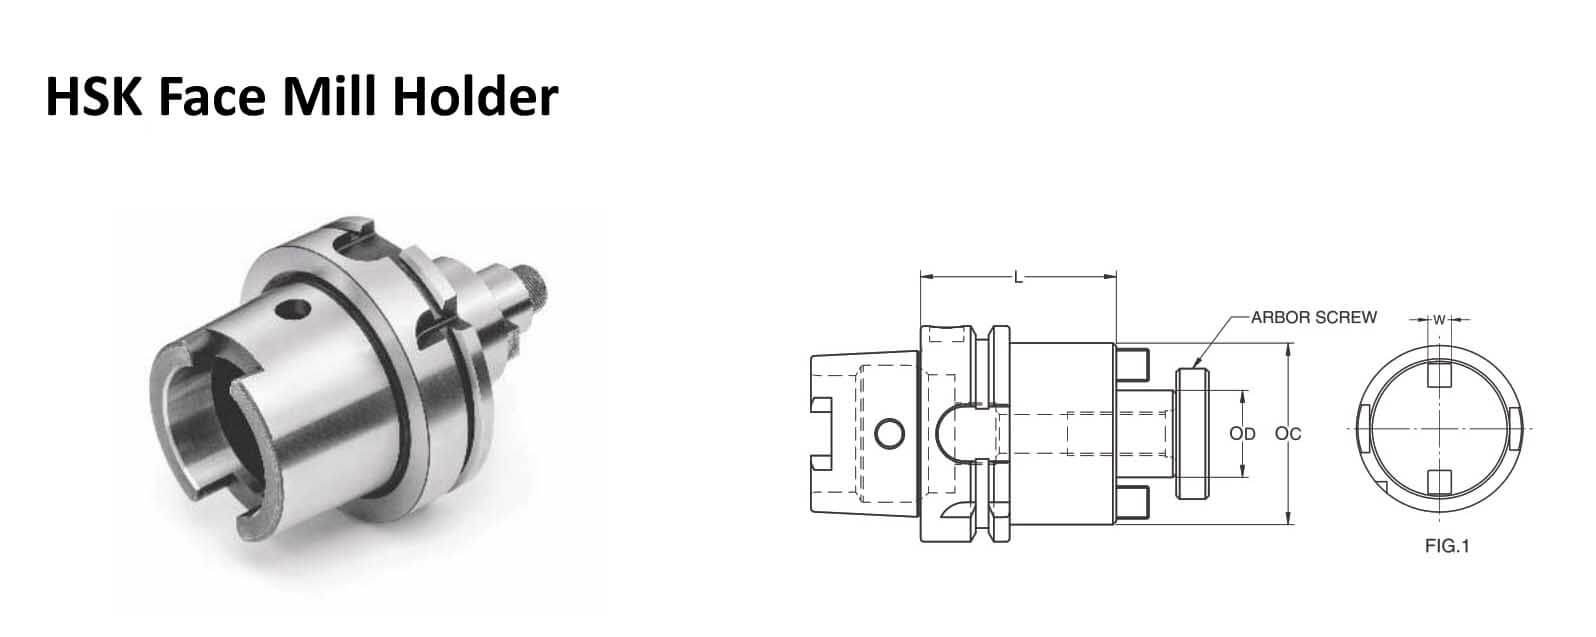 HSK-A 63 FMH 0.500 - 2.00 Face Mill Holder (Balanced to 2.5G 25000 RPM) (DIN 6357)